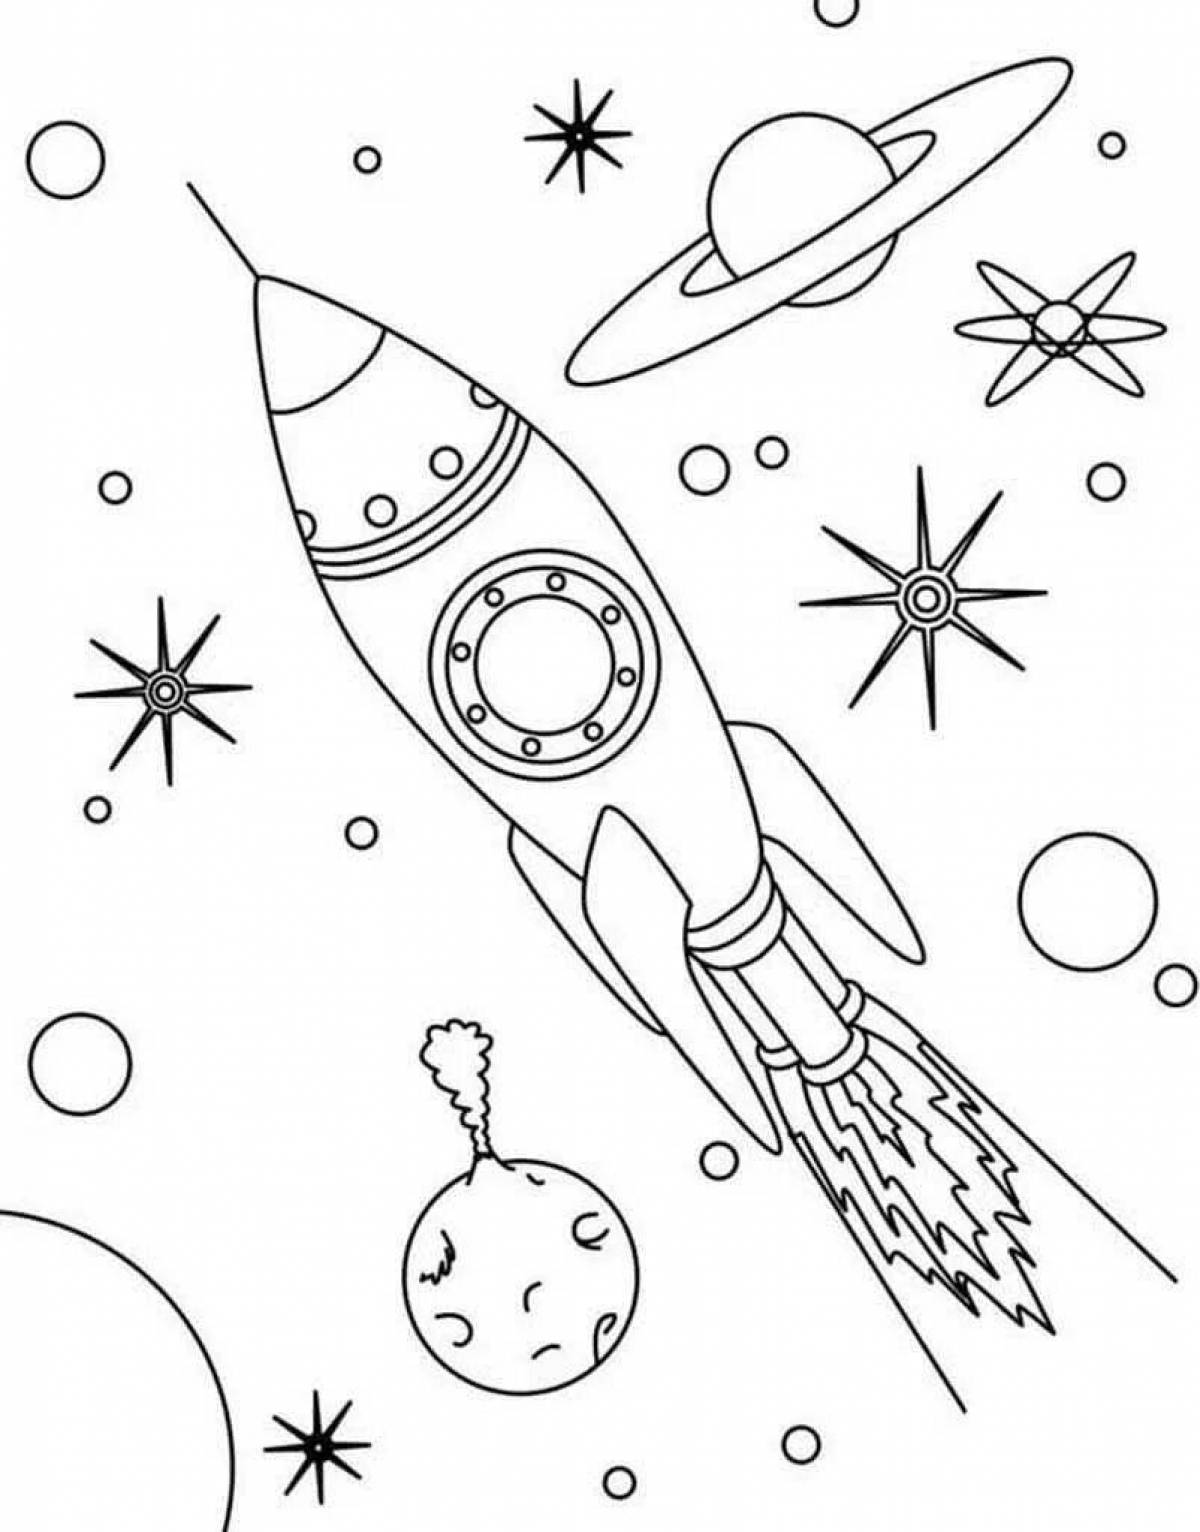 Cute rockets in space for kids